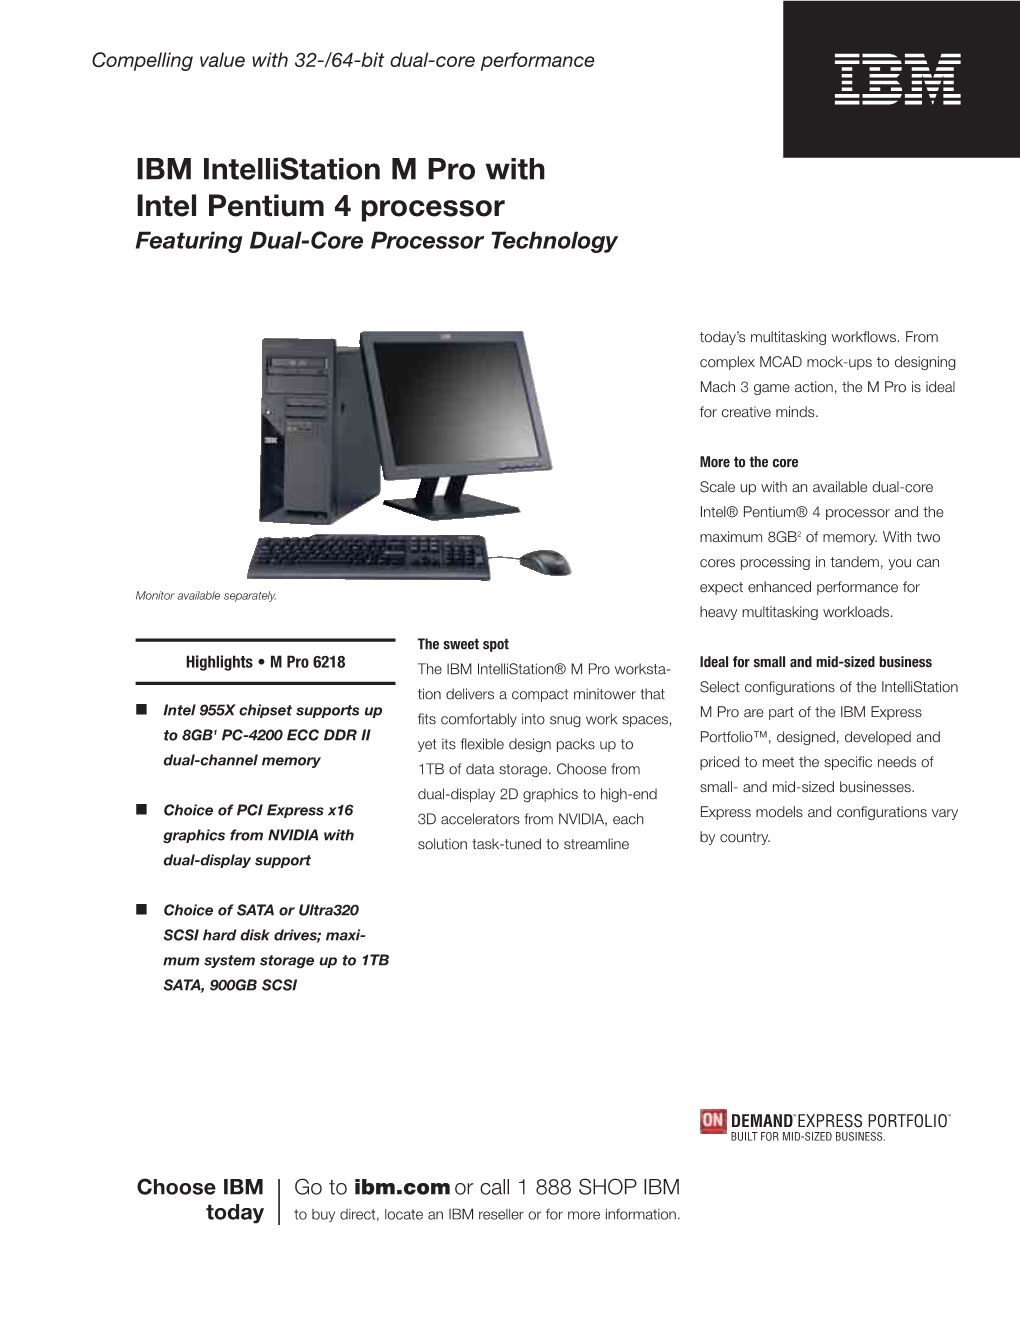 IBM Intellistation M Pro with Intel Pentium 4 Processor Featuring Dual-Core Processor Technology